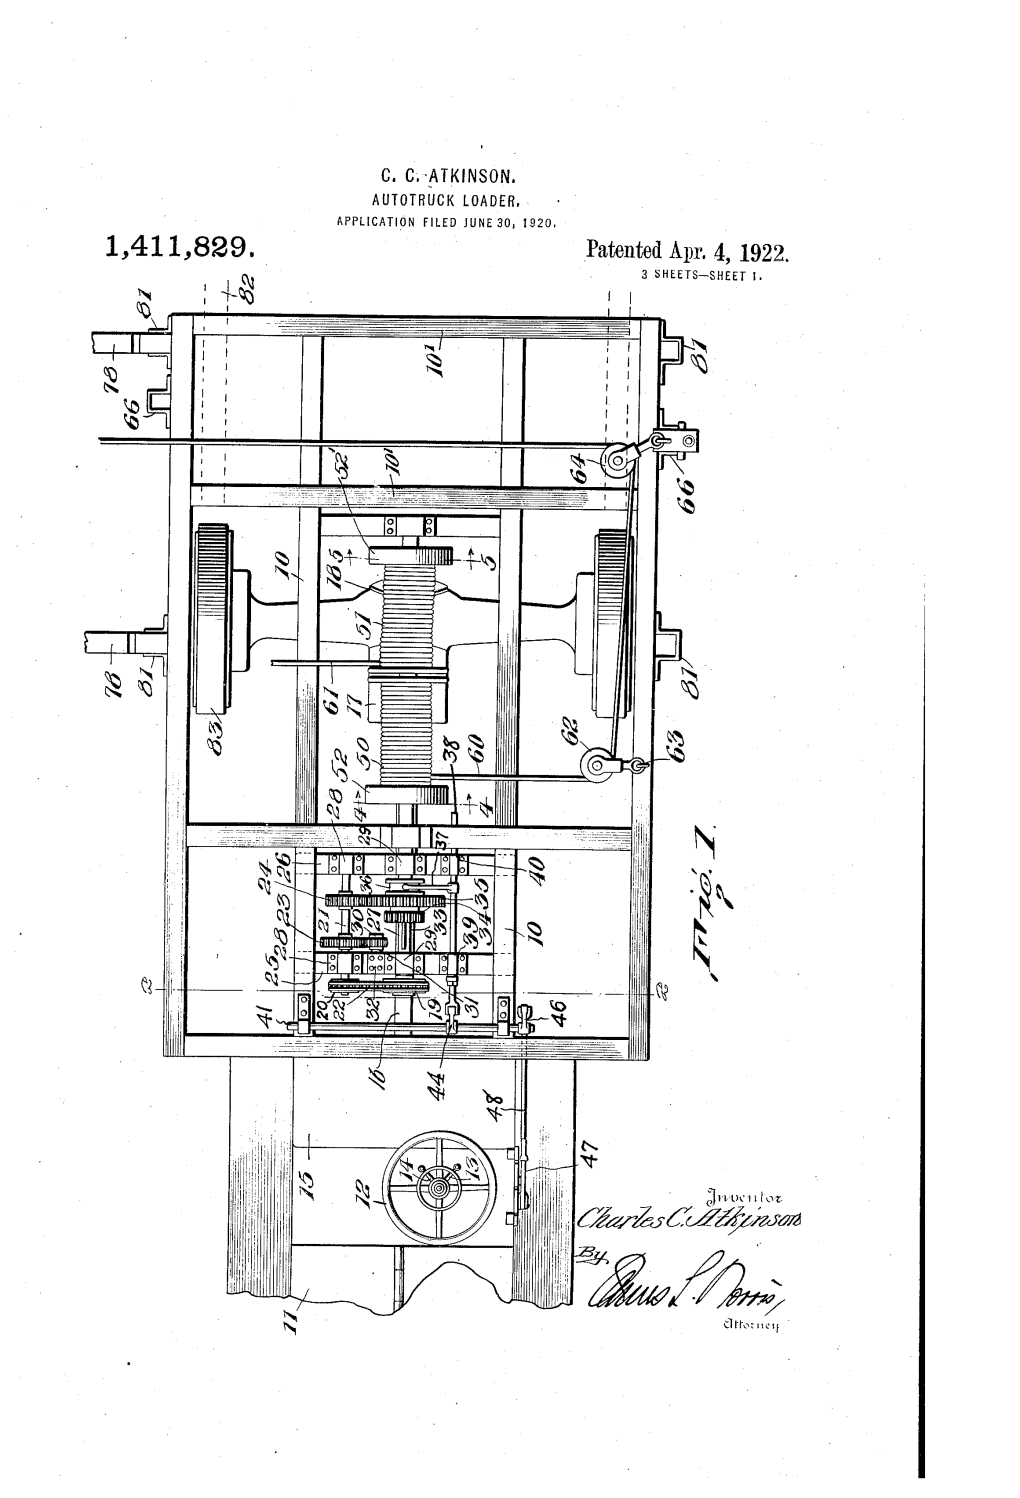 'Patented Apr. 4, 1922